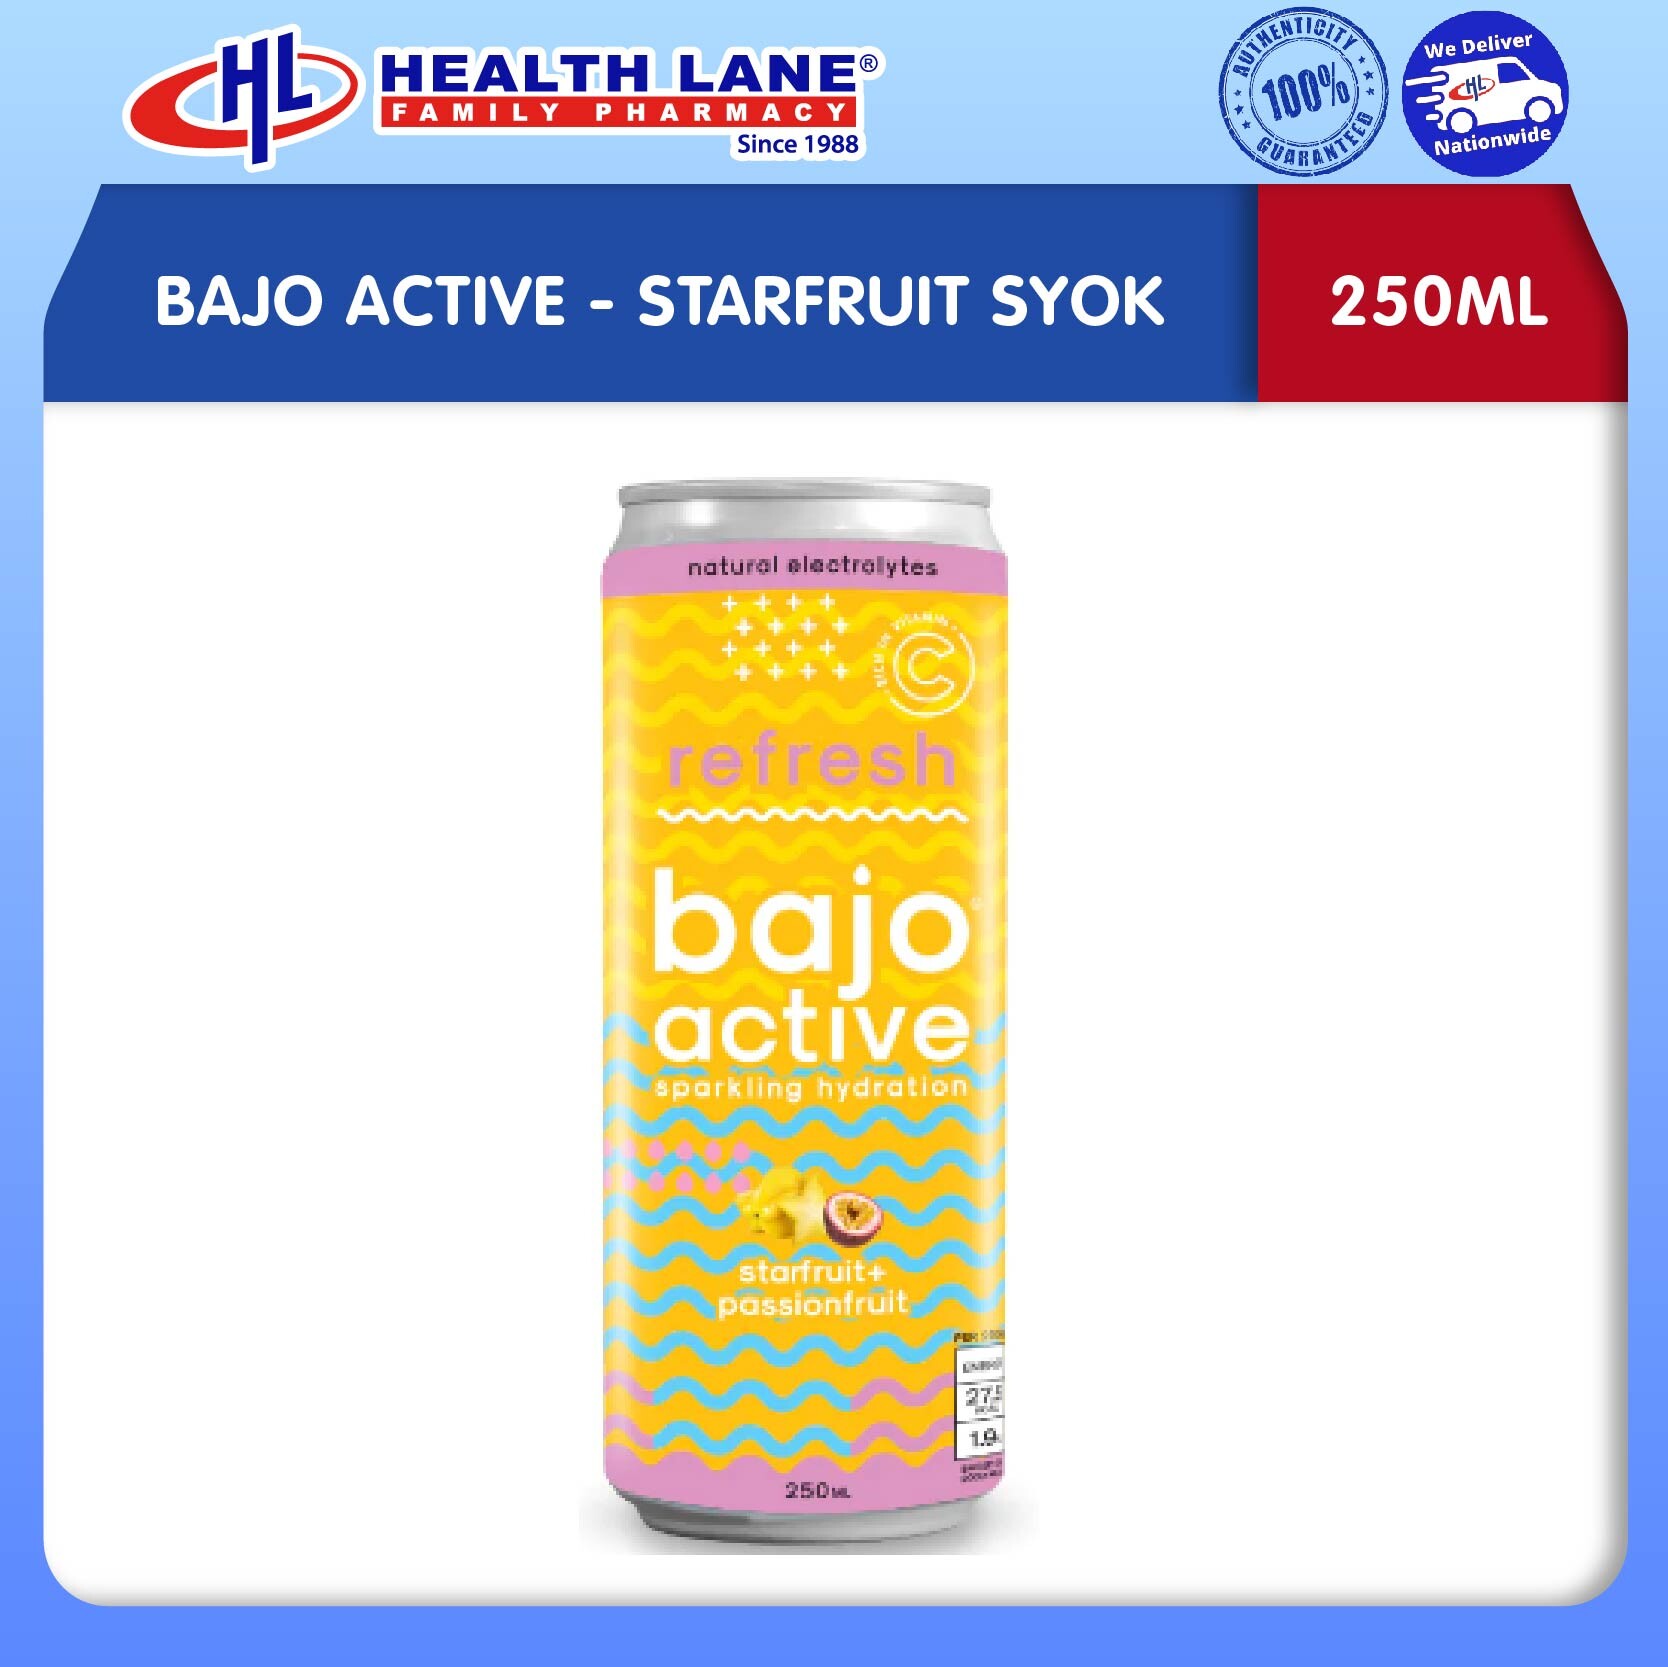 BAJO ACTIVE - STARFRUIT SYOK (250ML)